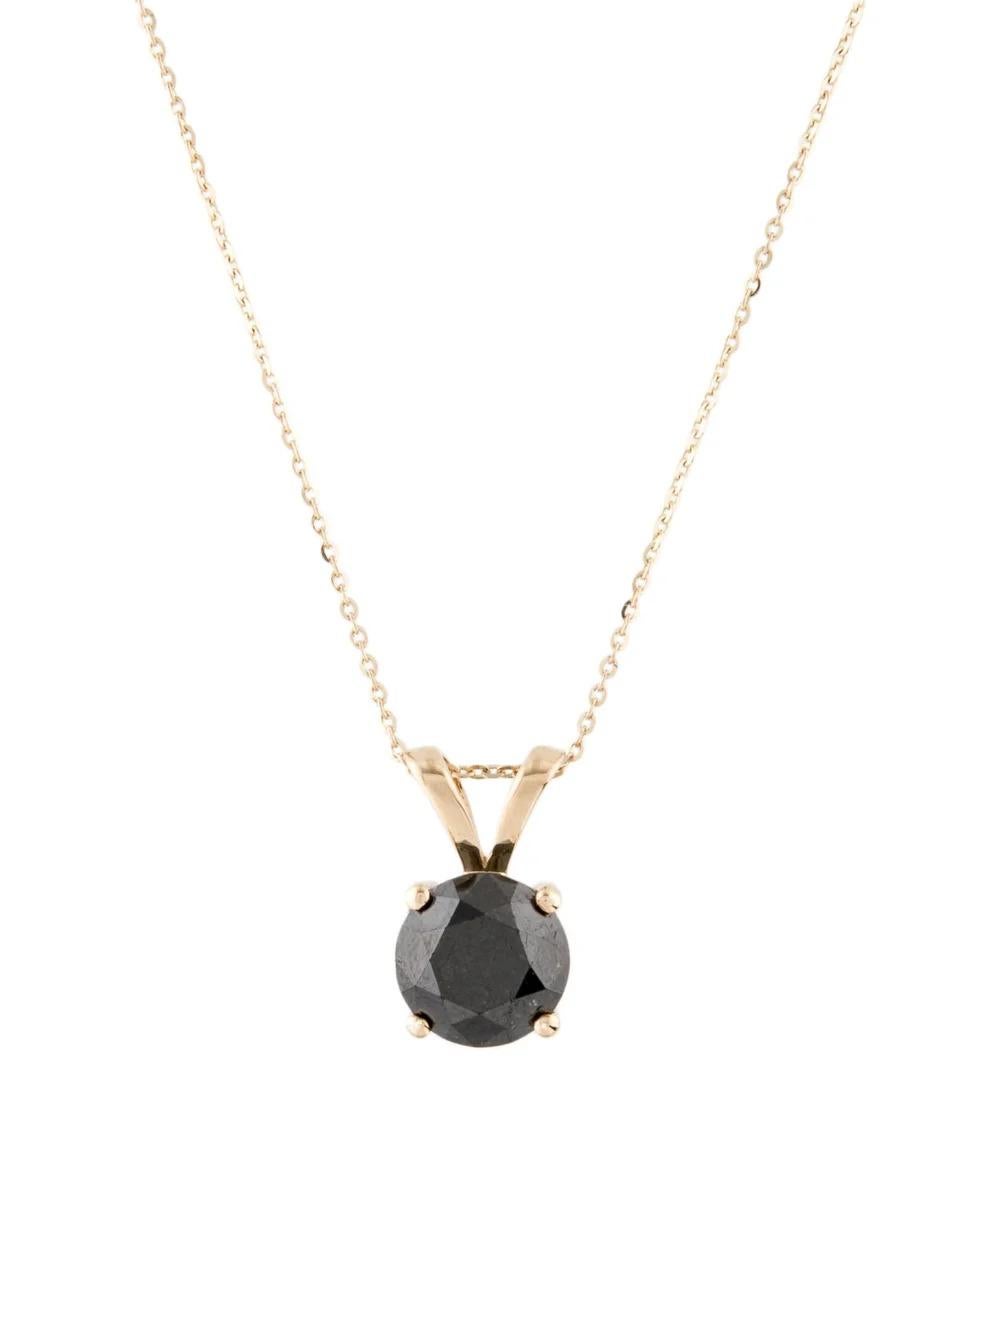 14K Diamond Pendant Necklace, 3.77ctw - Stunning Statement Jewelry, Luxury Piece